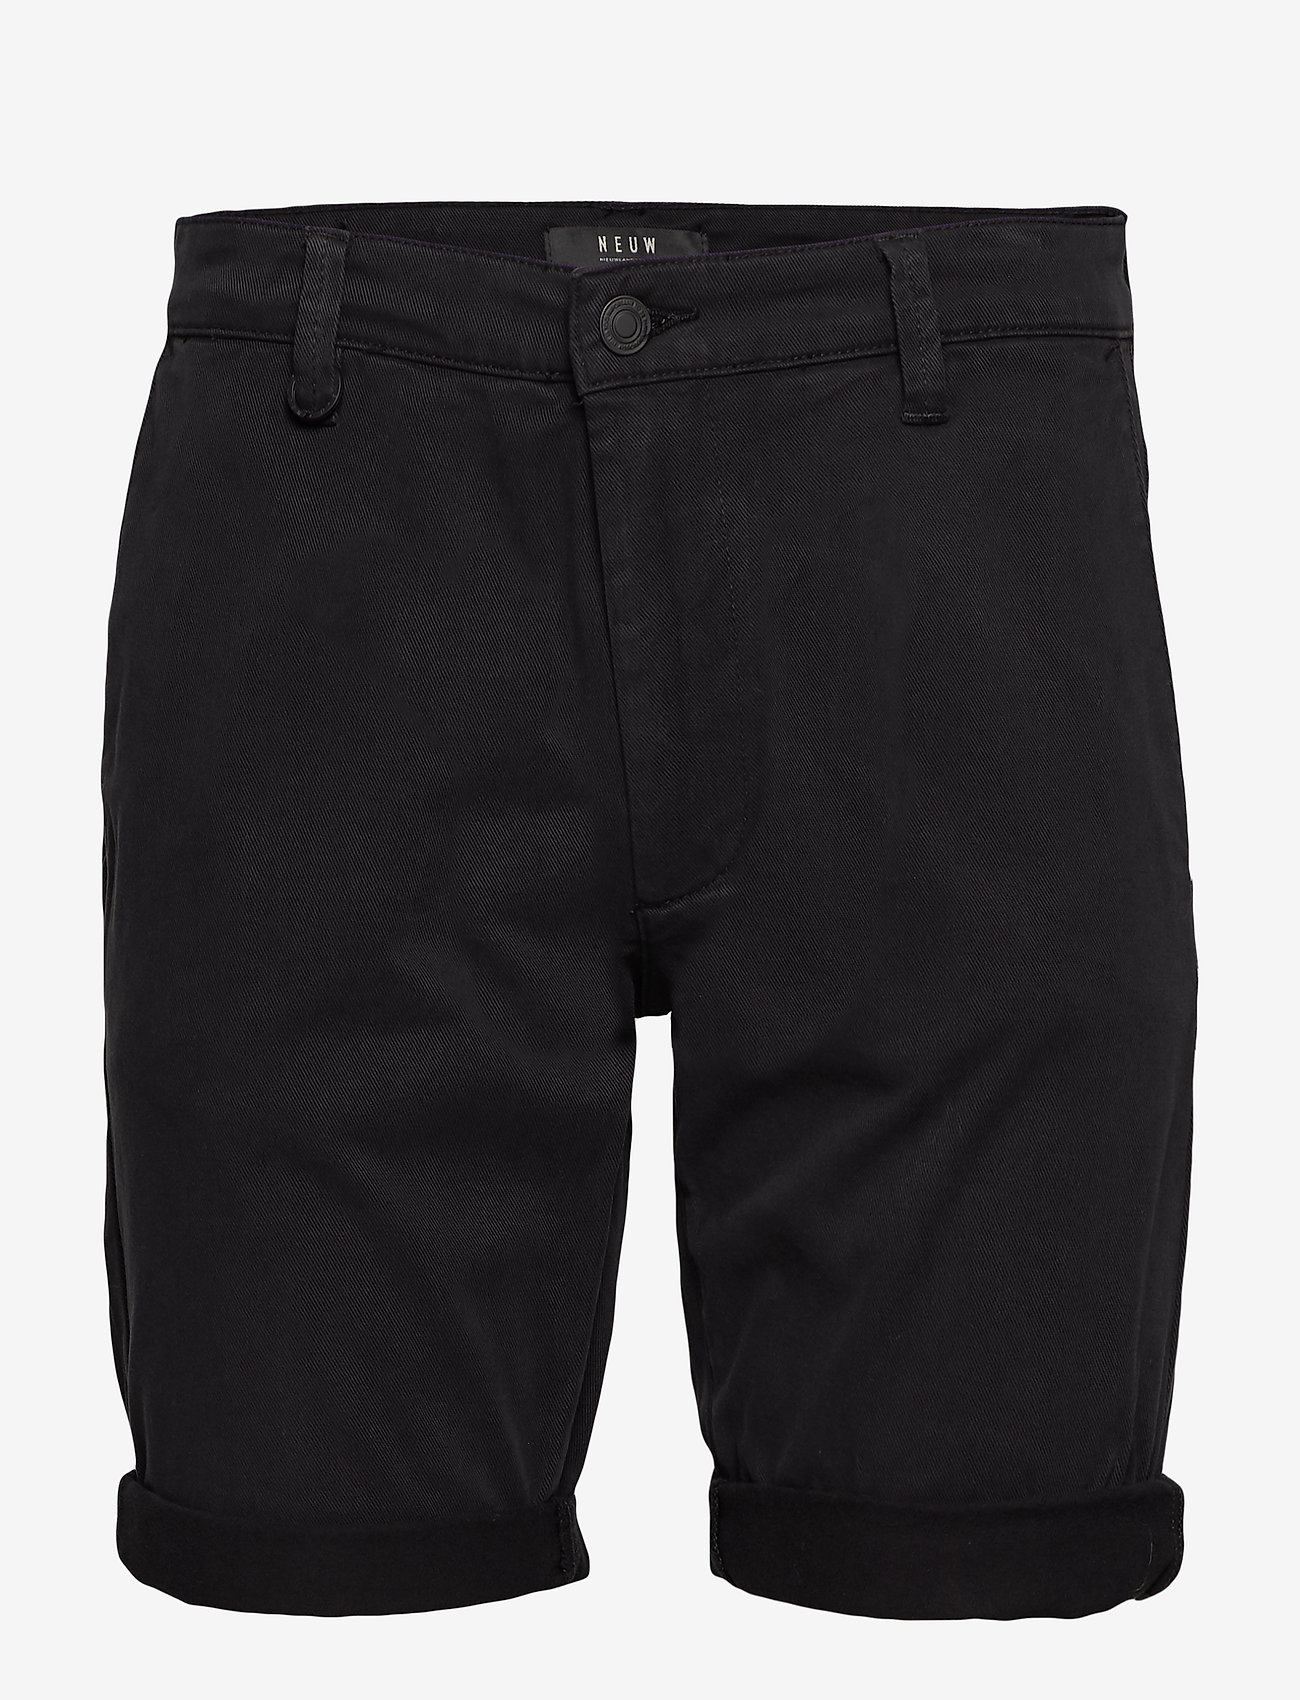 NEUW - CODY SHORT - chinos shorts - black - 0